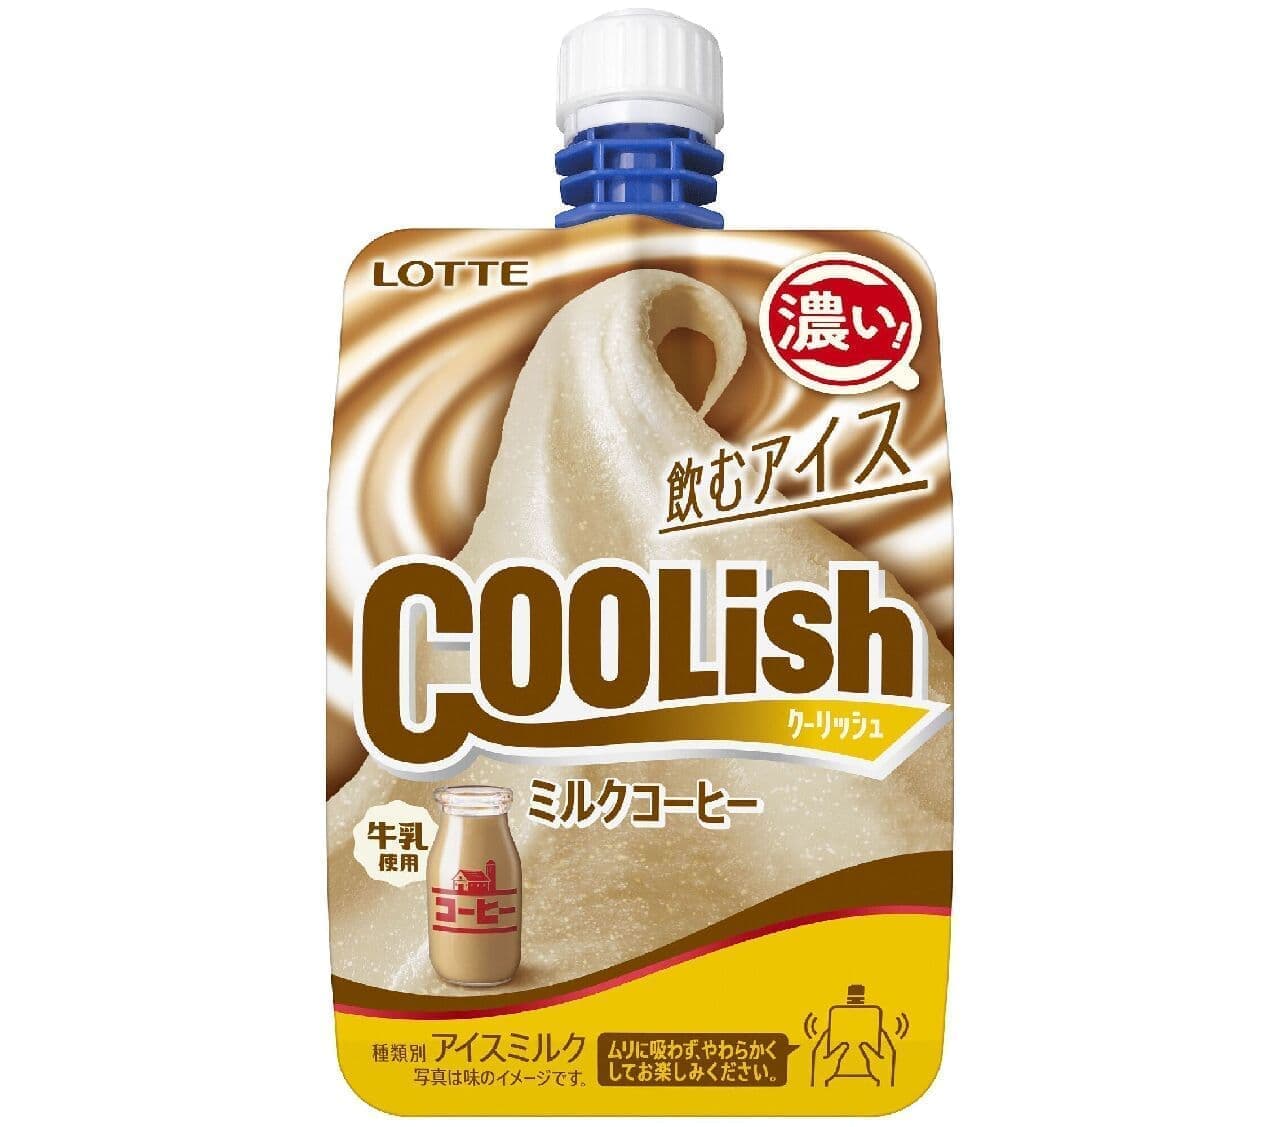 Lotte "Coolish Milk Coffee"